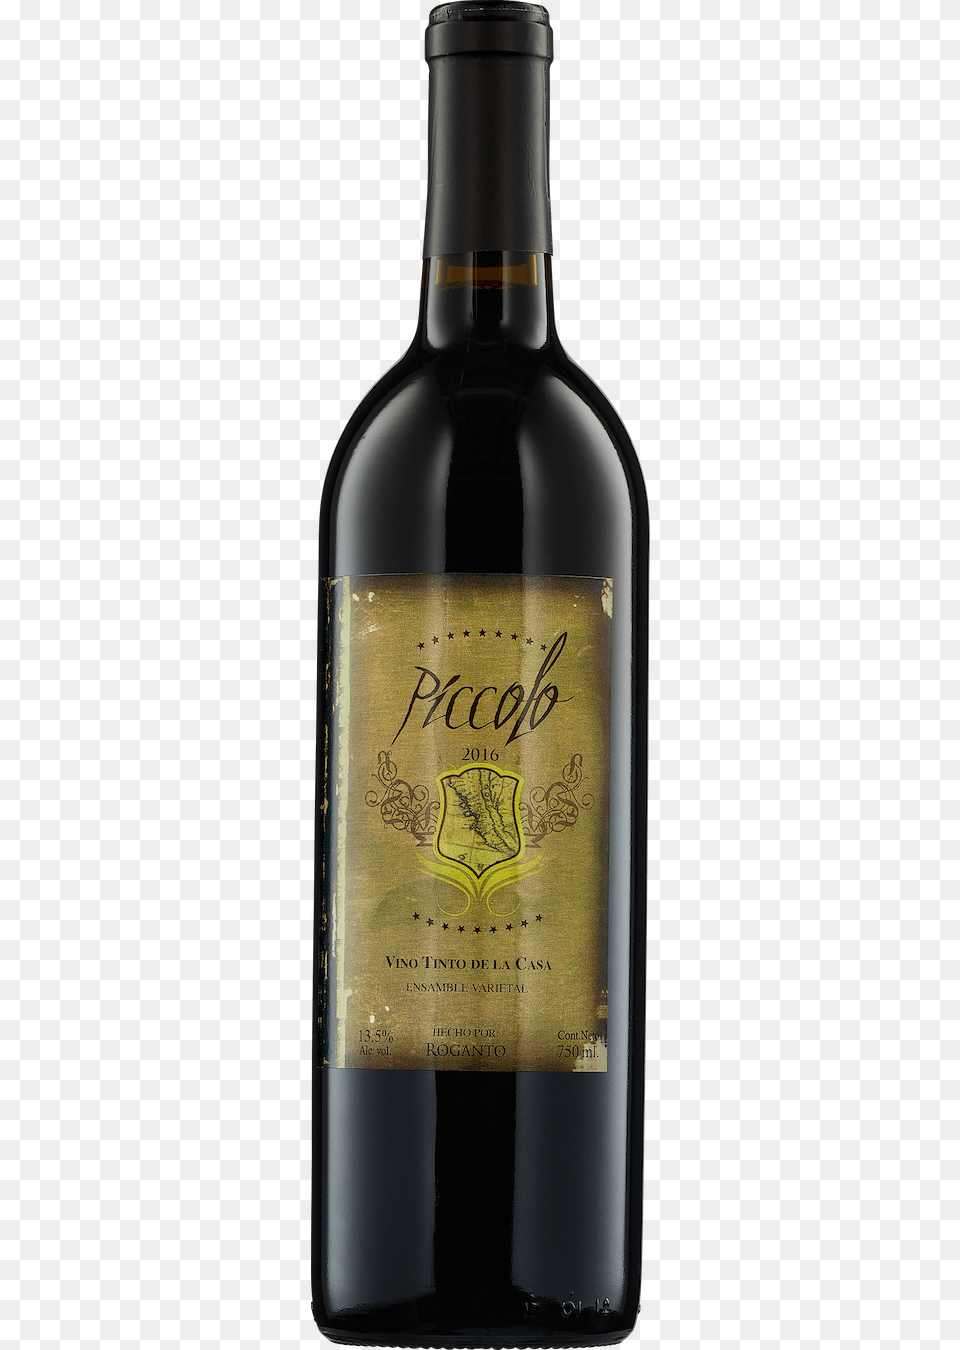 Bottle Of Roganto 2016 Red Blend Piccolo Glass Bottle, Alcohol, Beverage, Liquor, Wine Free Png